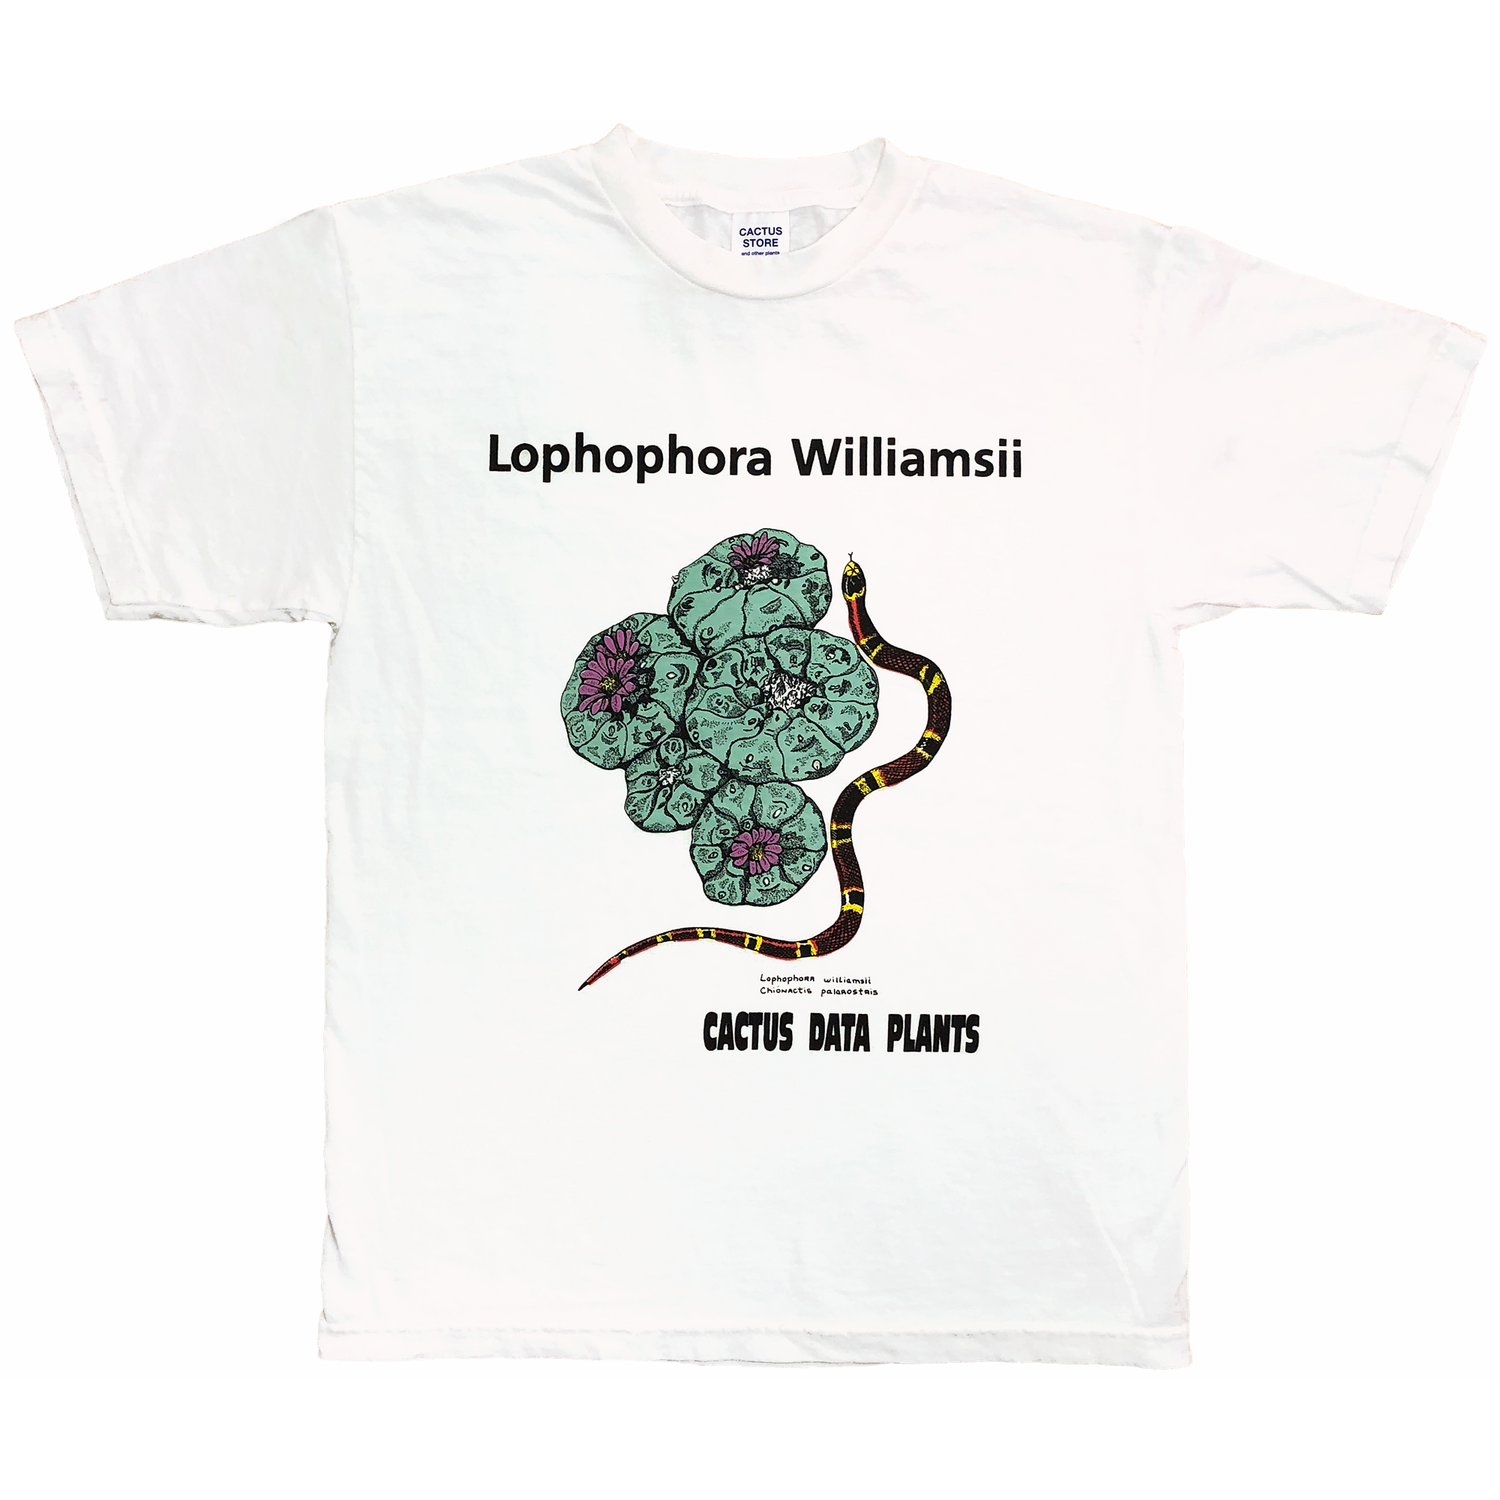 Lophophora williamsii (W.M. Reprint) T-Shirt